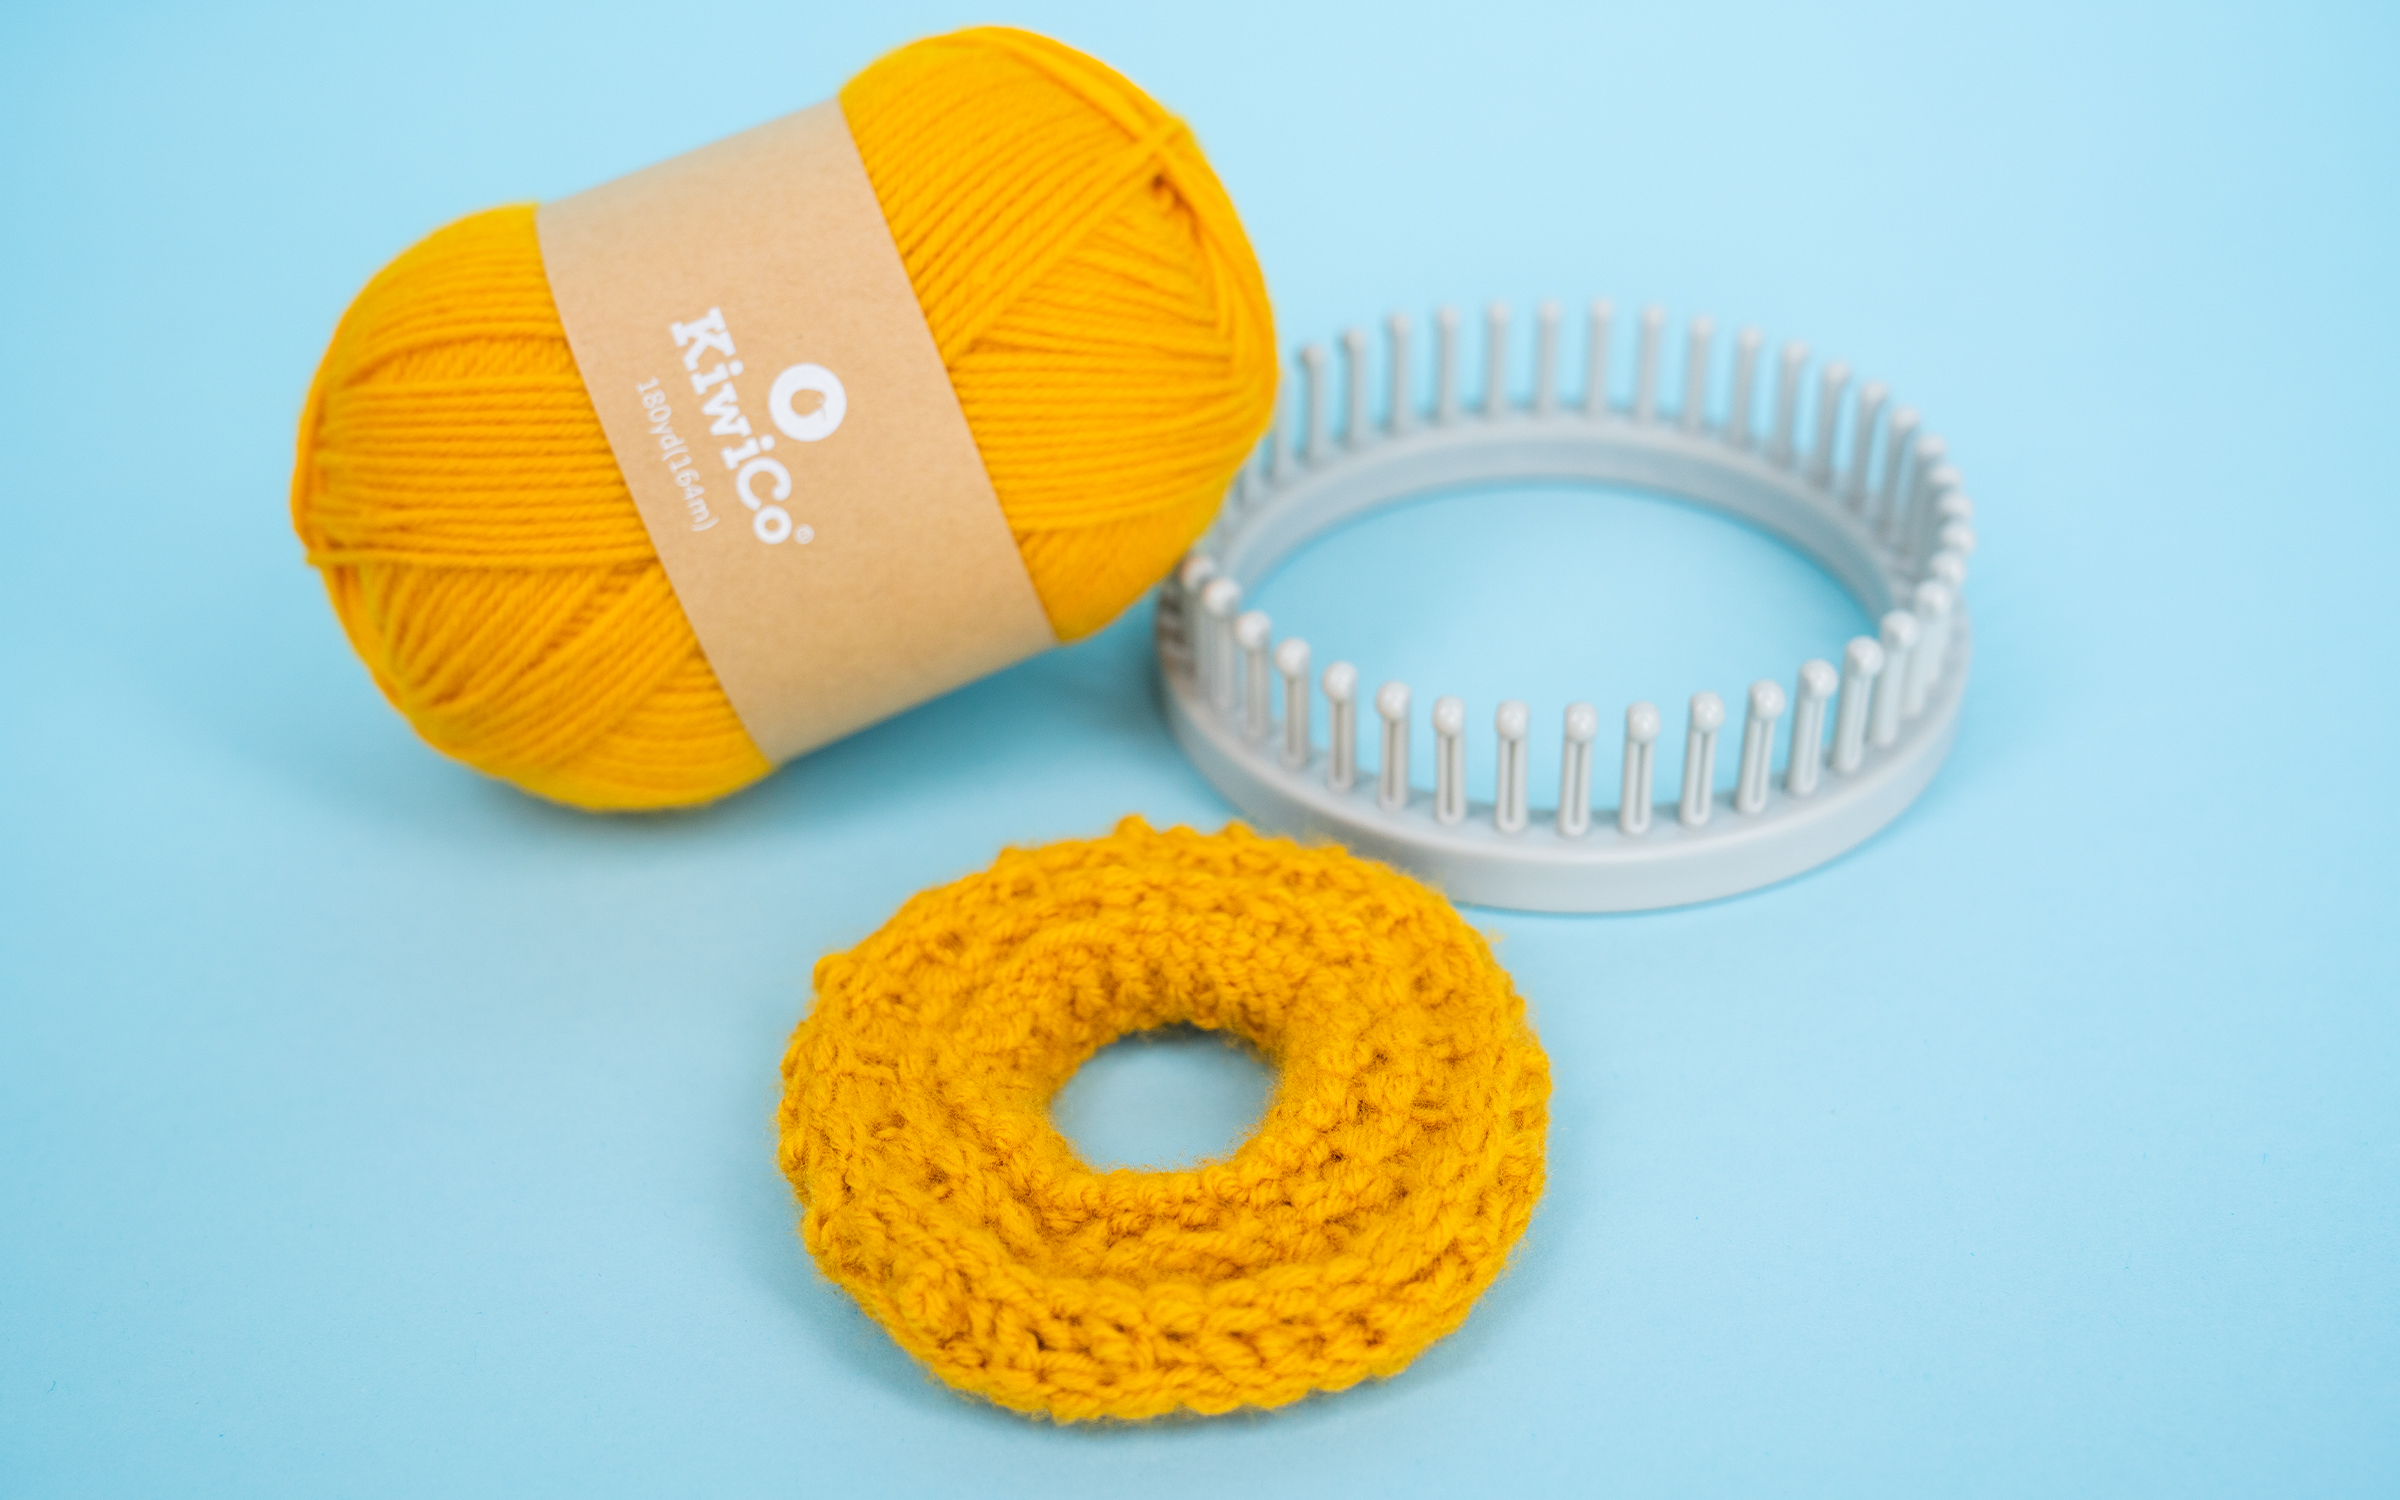  Simplicity Small Long Plastic Knitting Loom, 4pc, 2.6 x 10.2